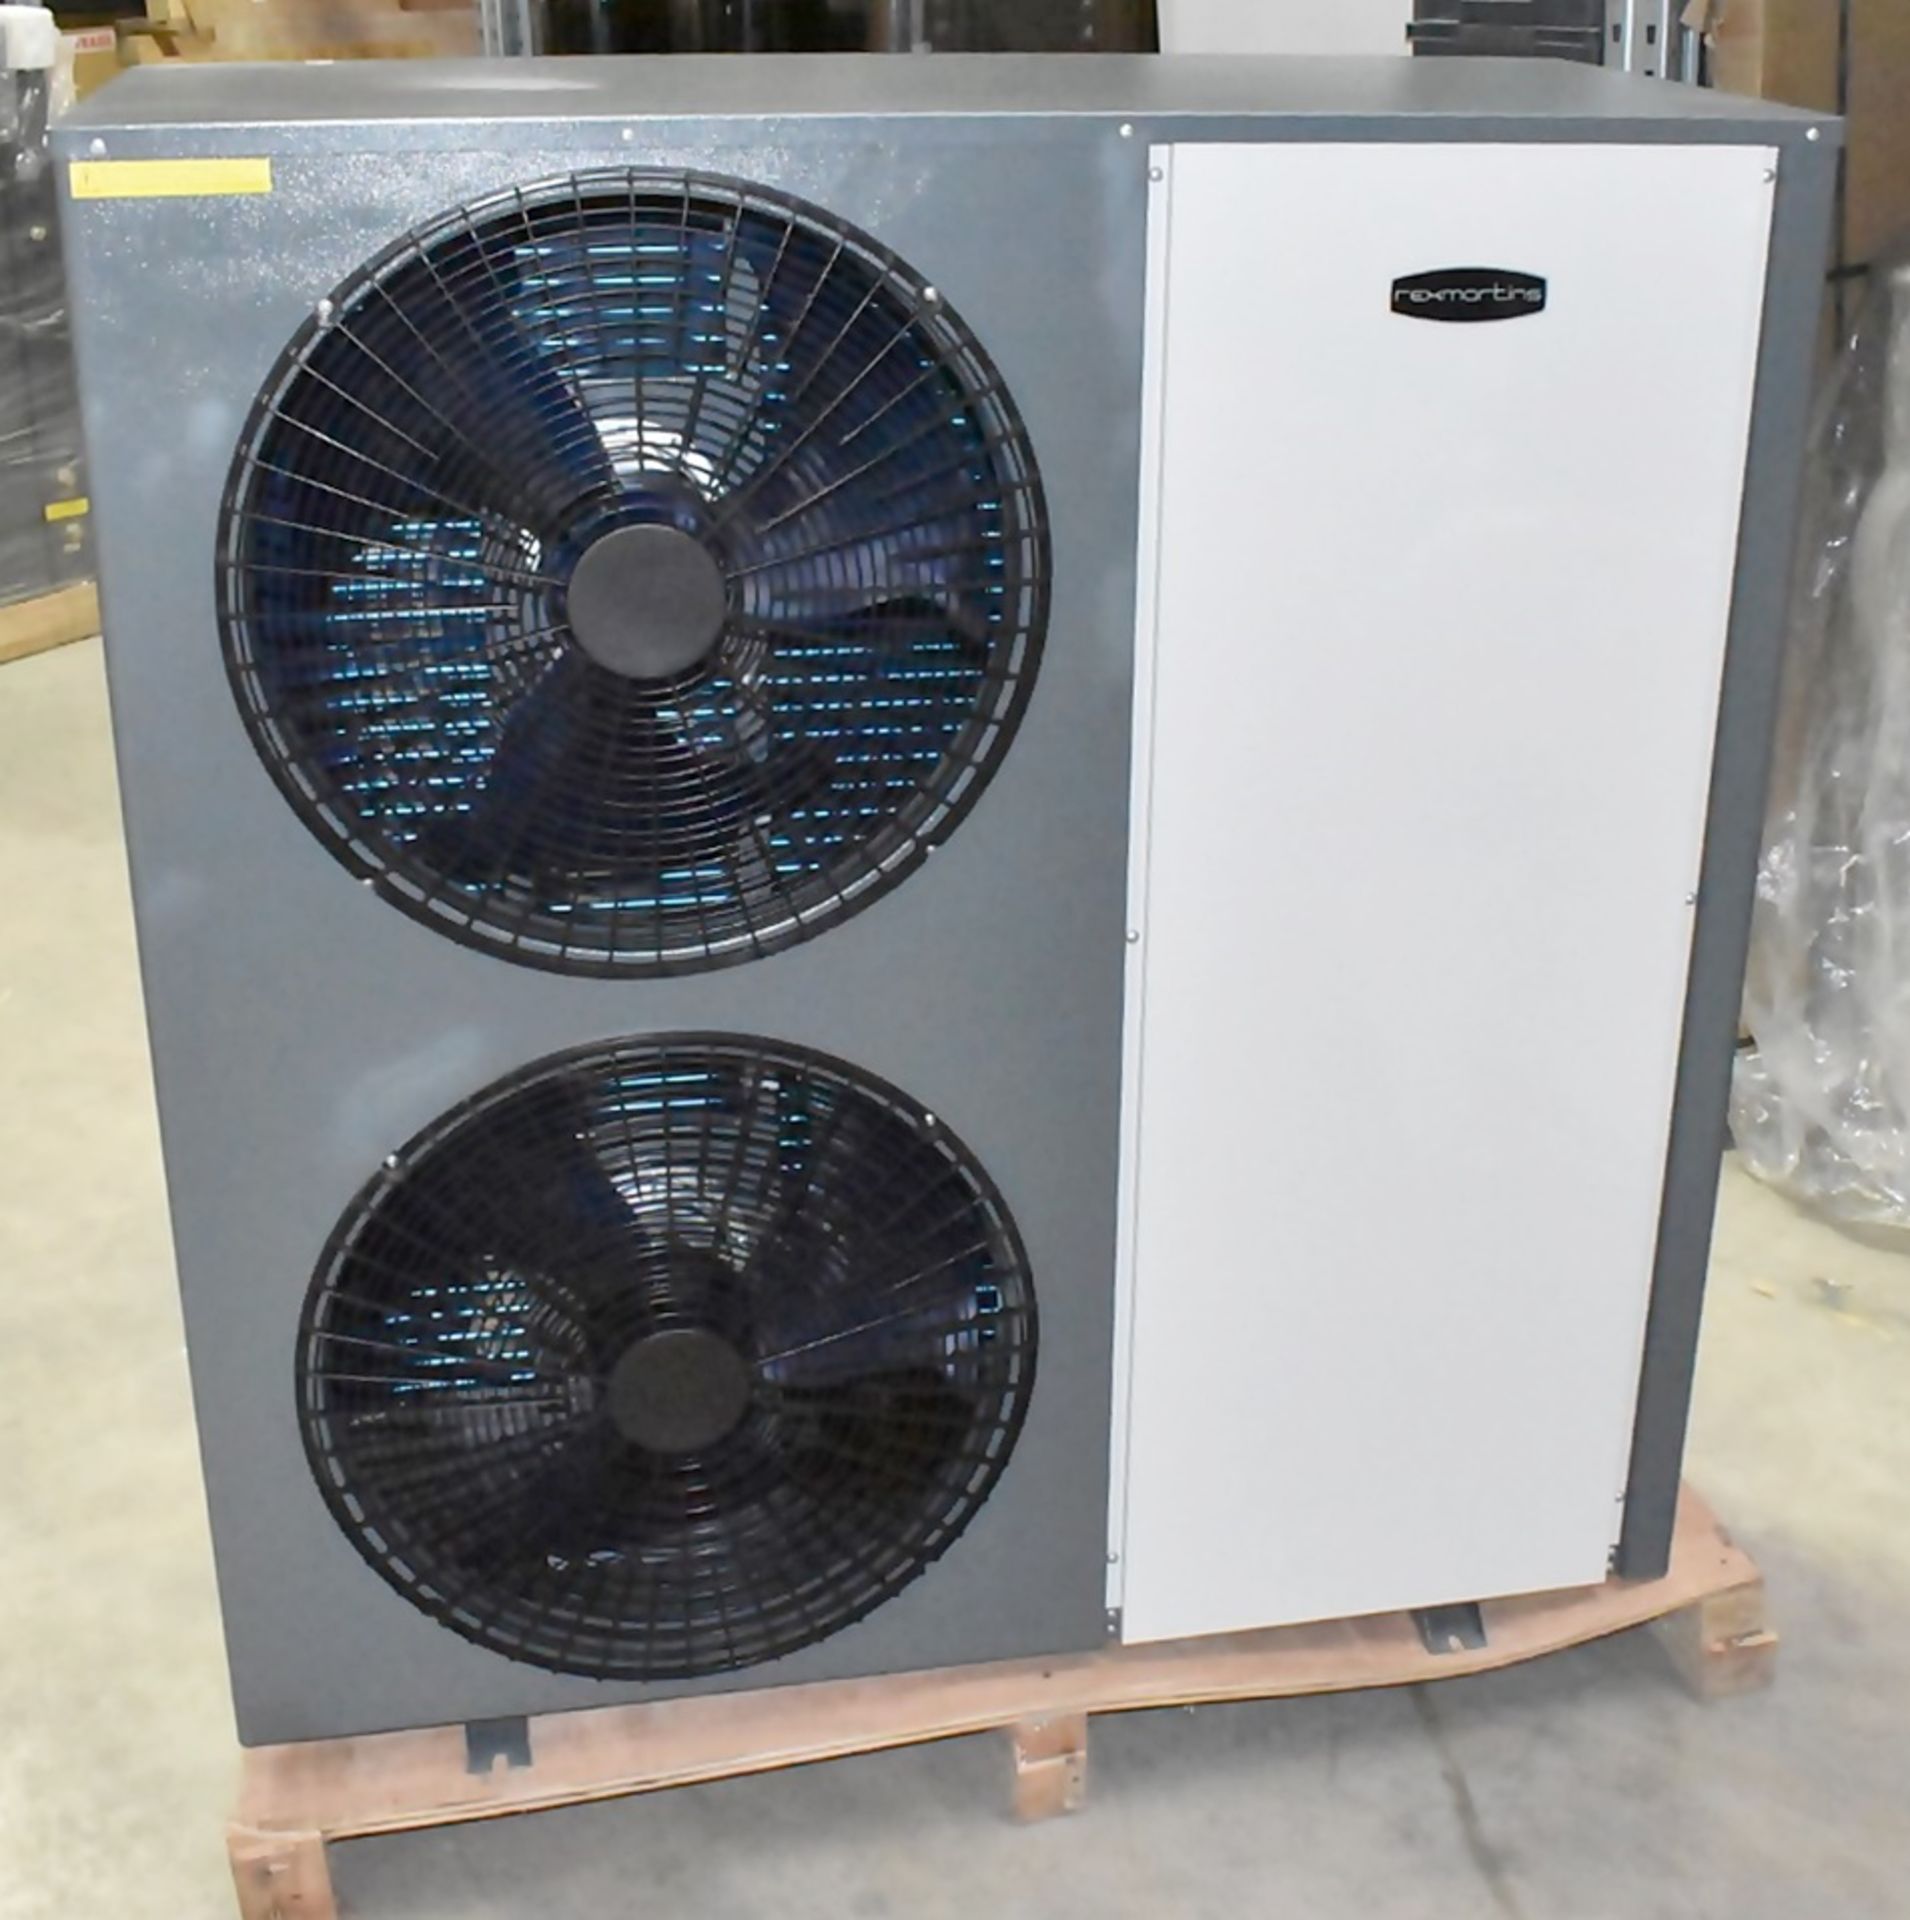 1 x REXMARTINS 'New-Energy 002' 22 kW Air Source Heat Pump (Model BKDX60-220) - New / Unused - Image 5 of 42